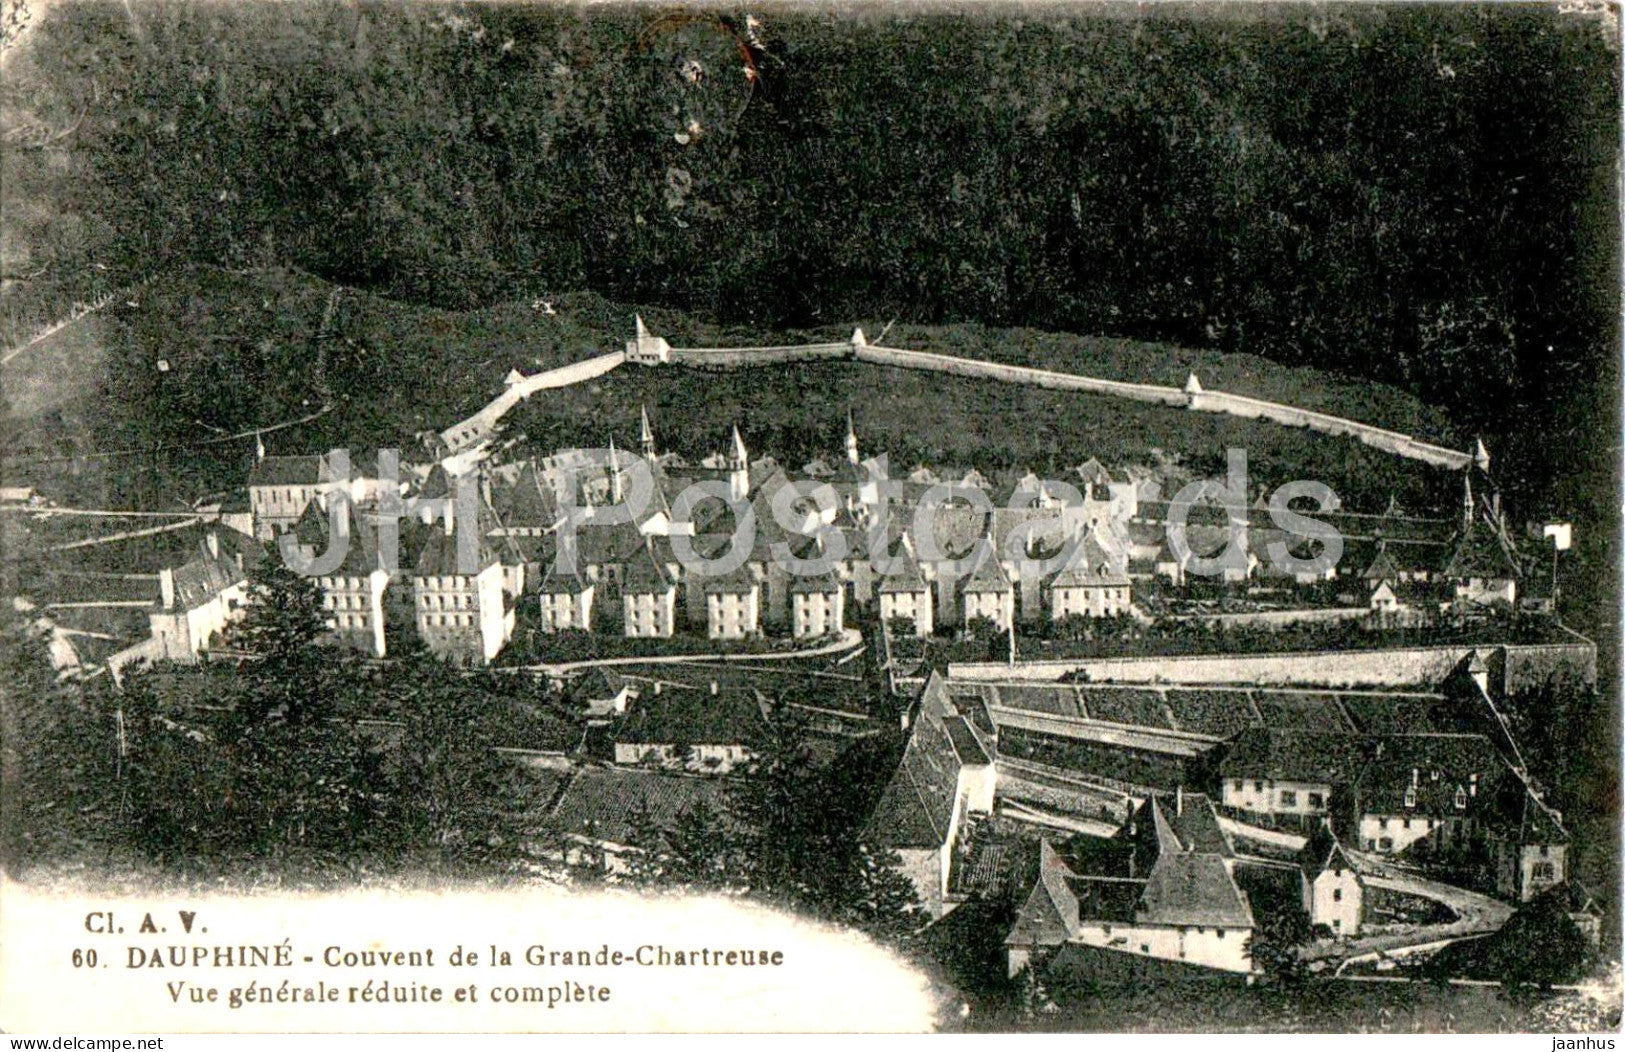 Dauphine - Couvent de la Grande Chartreuse - Vue Generale reduite et complete - 60 - old postcard - 1927 - France - used - JH Postcards